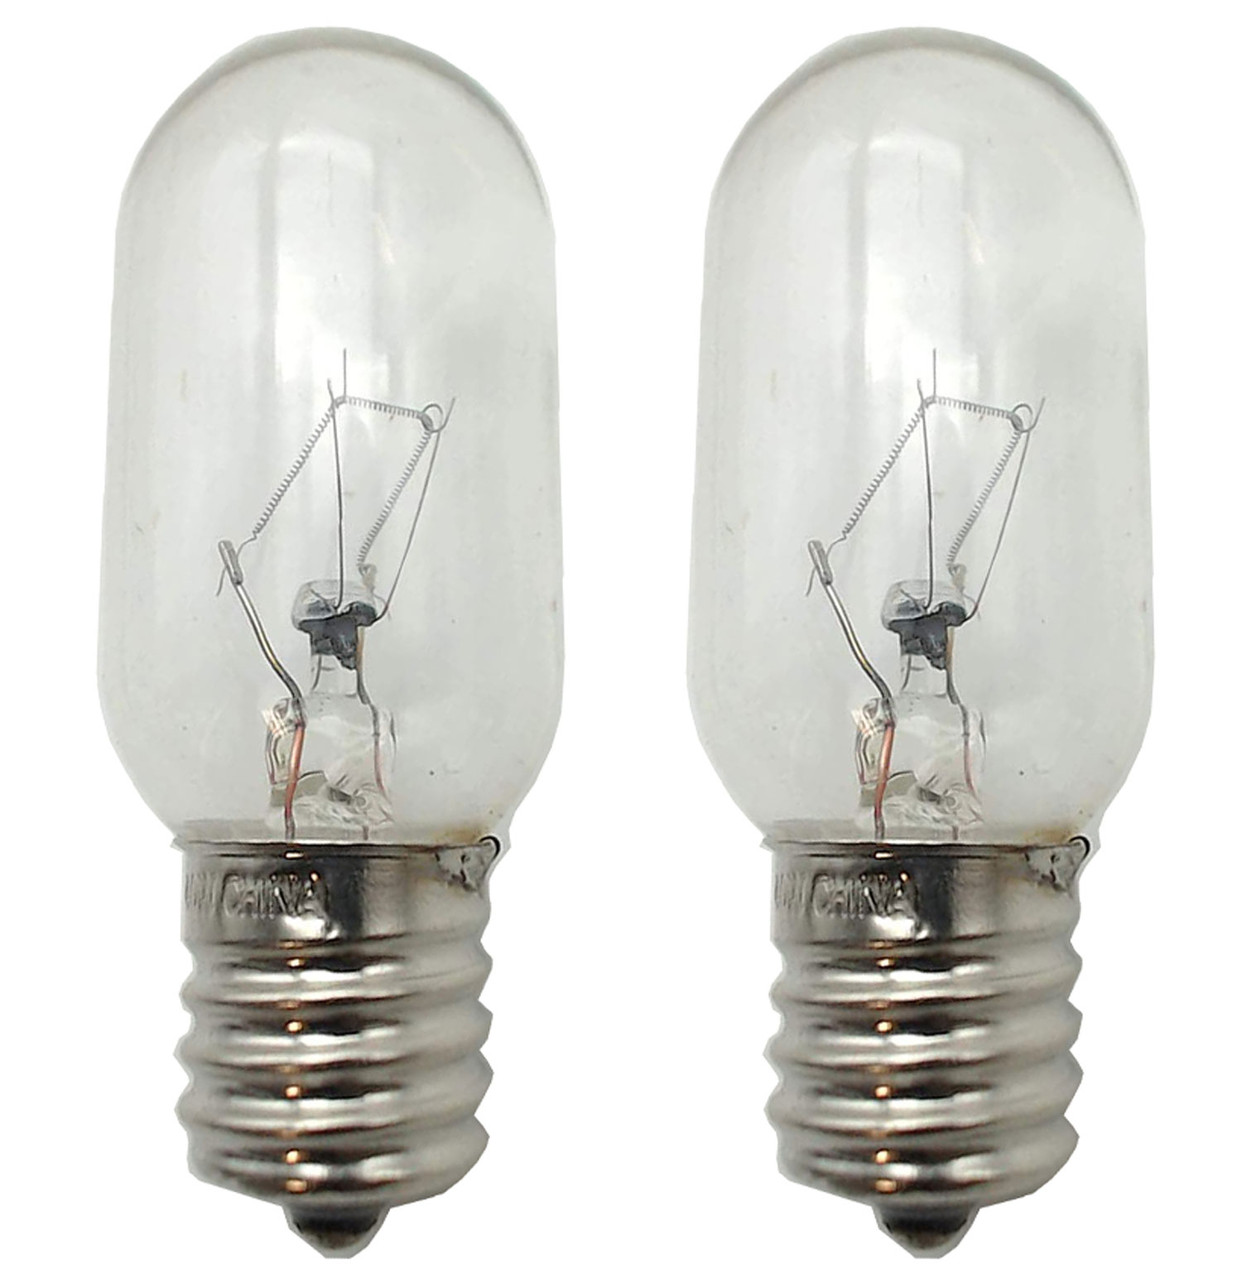 Kenmore 25370609415 Refrigerator Light Bulbs (2 Pack) 